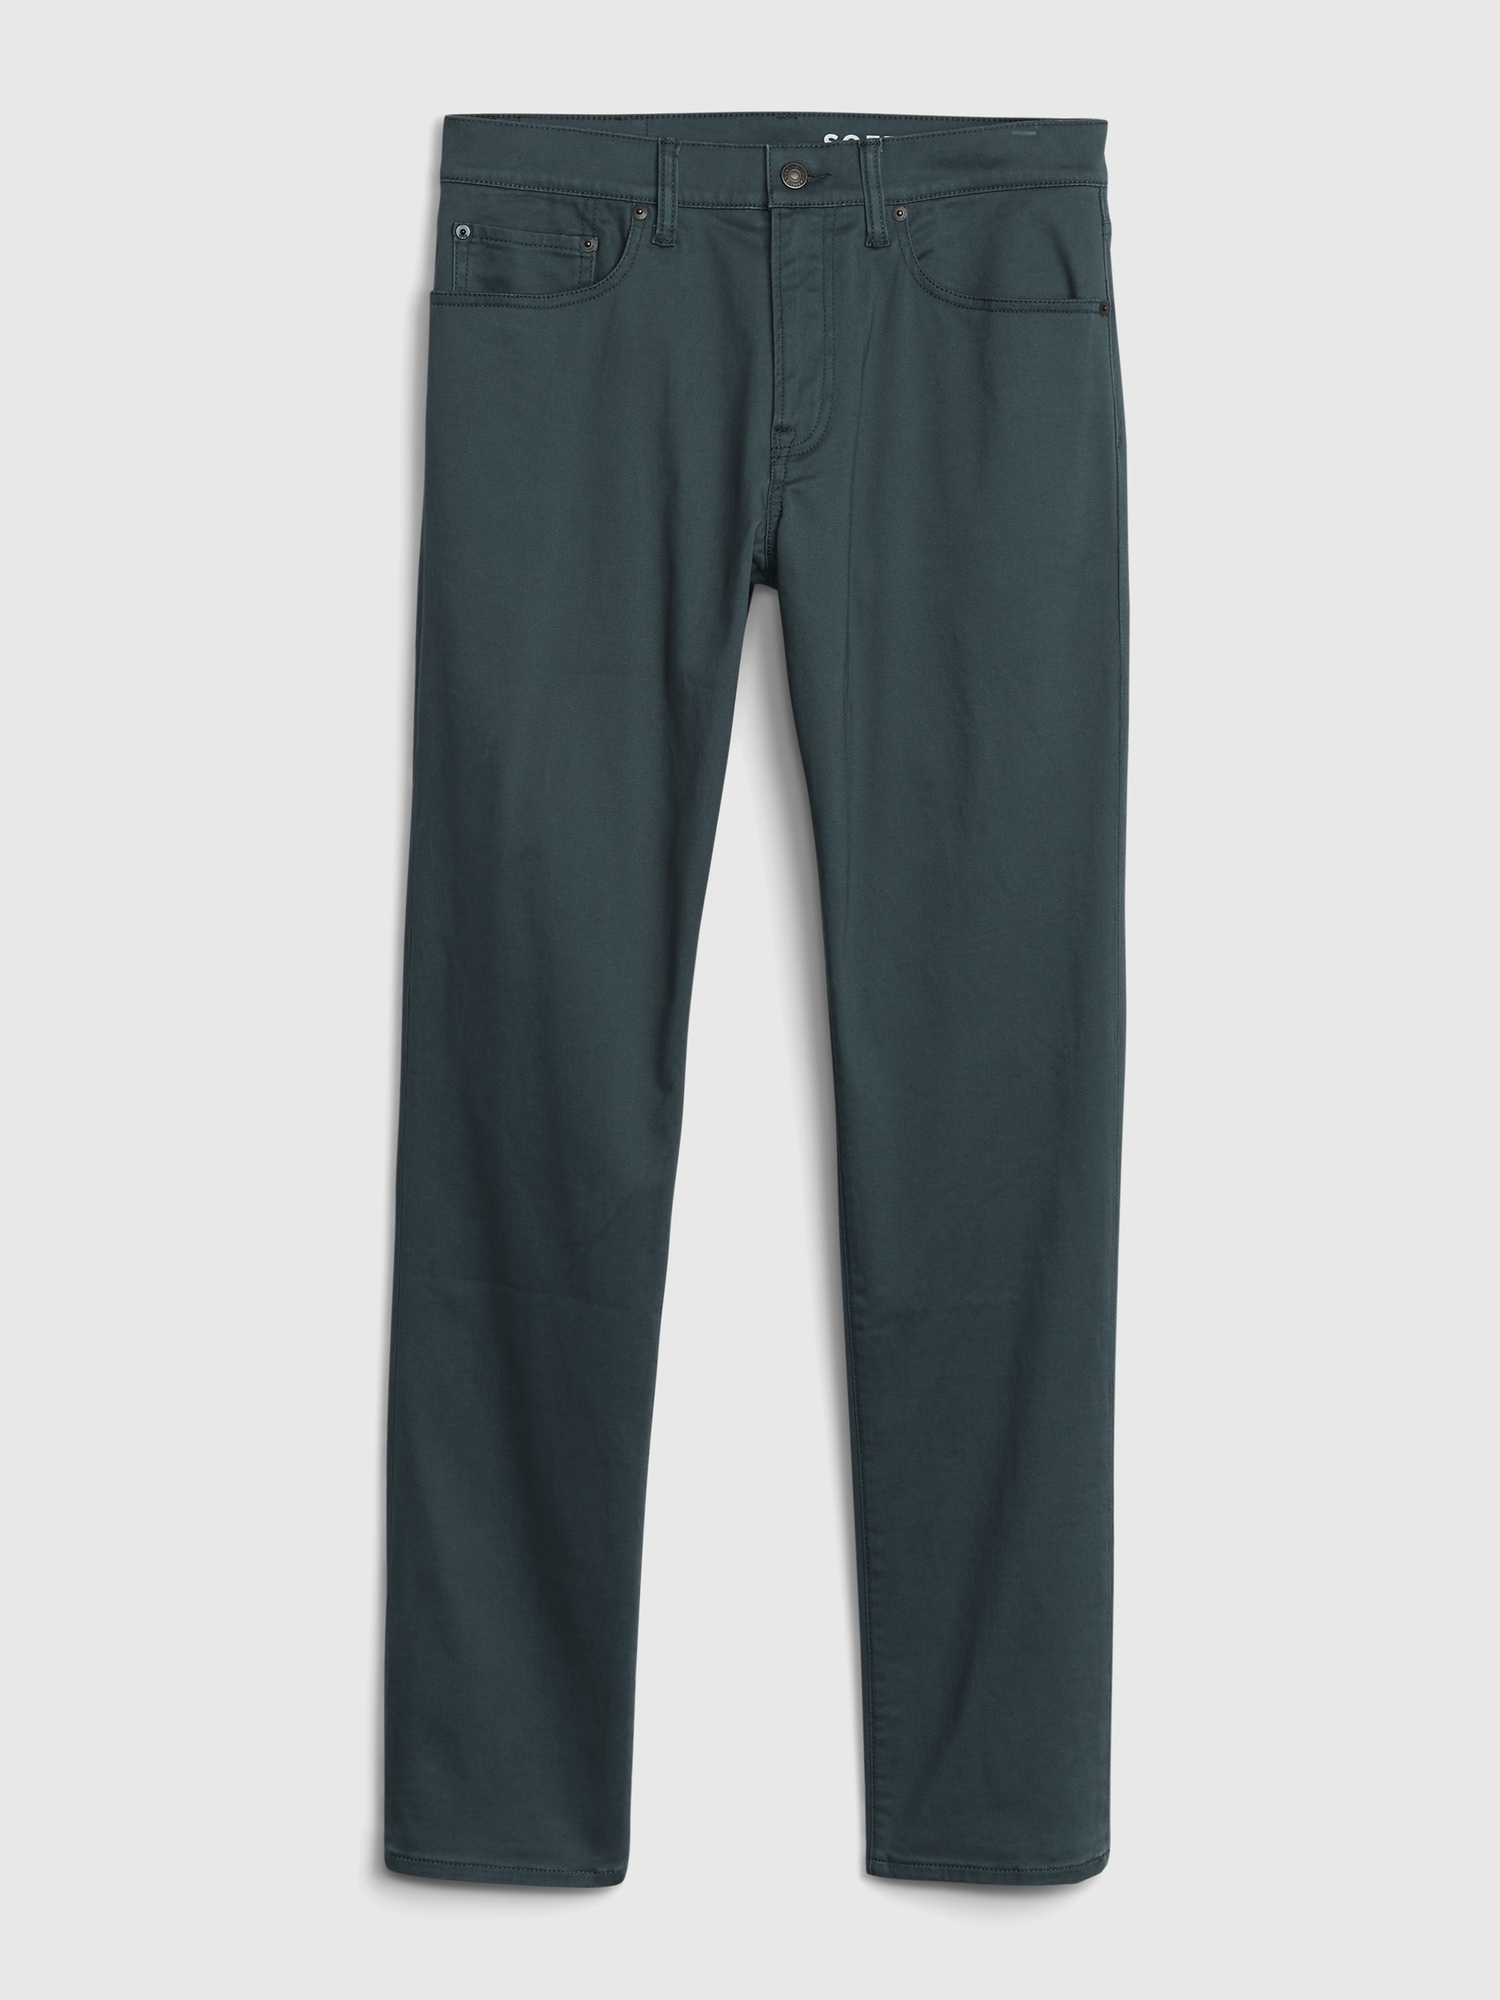 Gap Denim Men's Soft Wear Skinny Moulant Fit Jeans Size 32X34